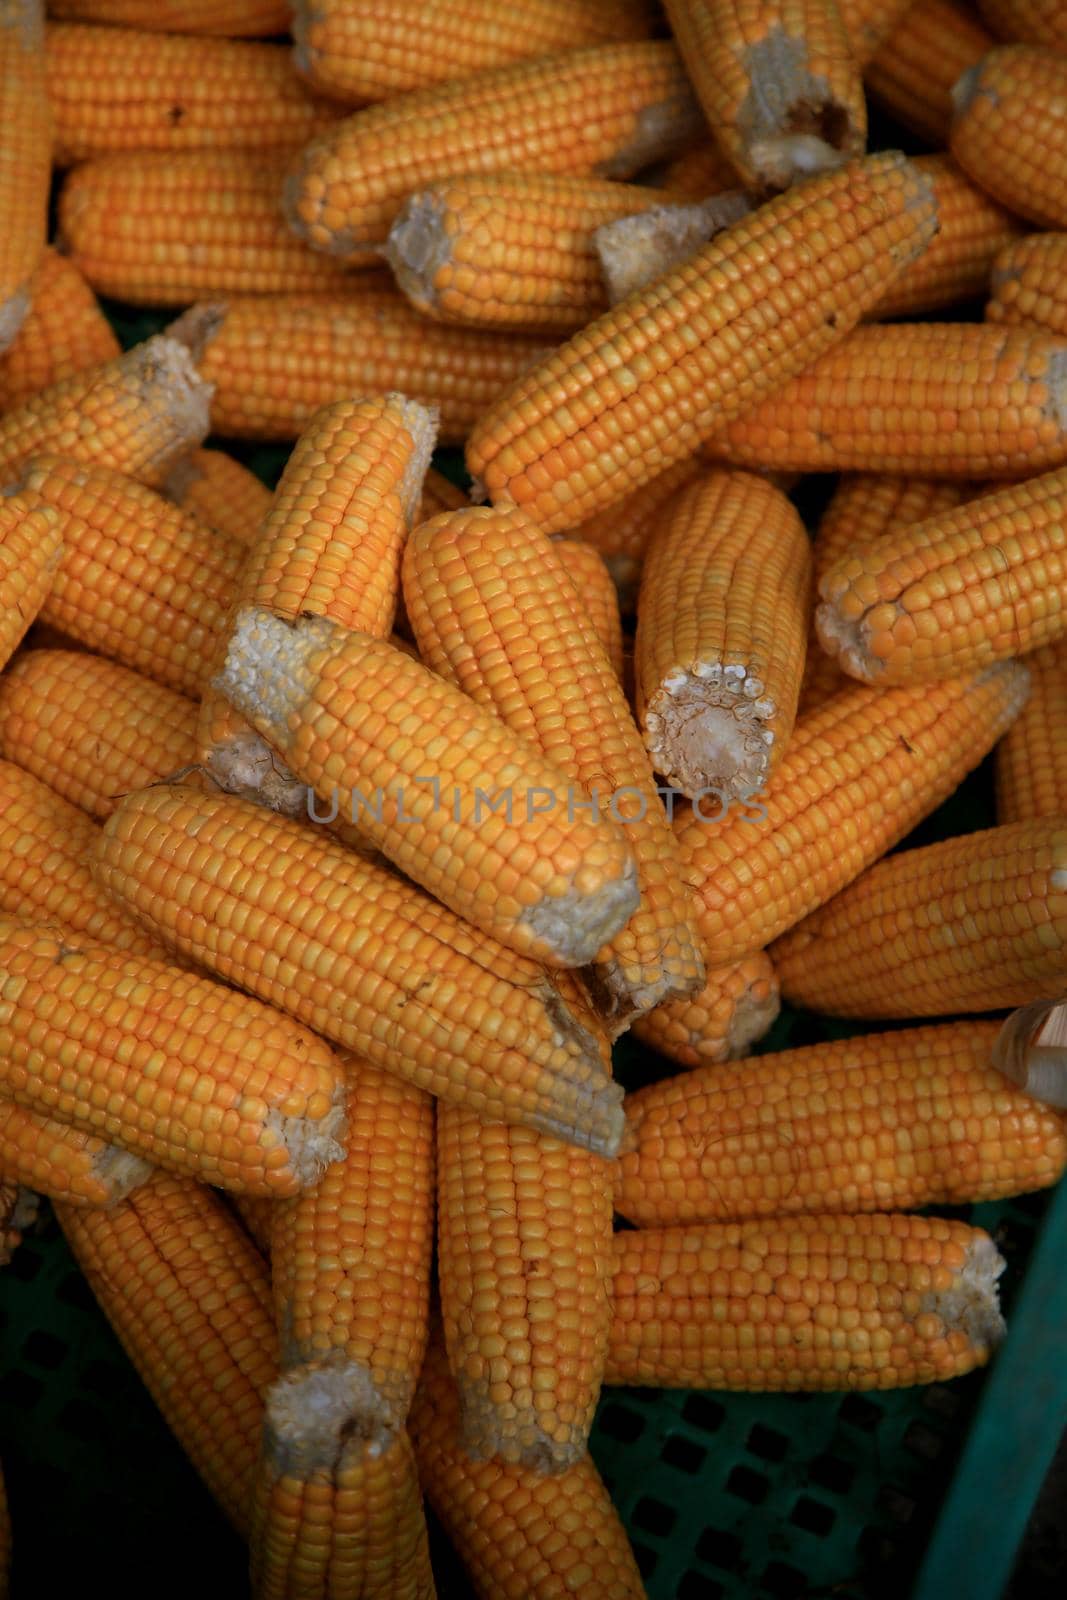 salvador, bahia, brazil - april 30, 2022: corn cobs for sale at the Sao Joaquim fair in the city of Salvador.